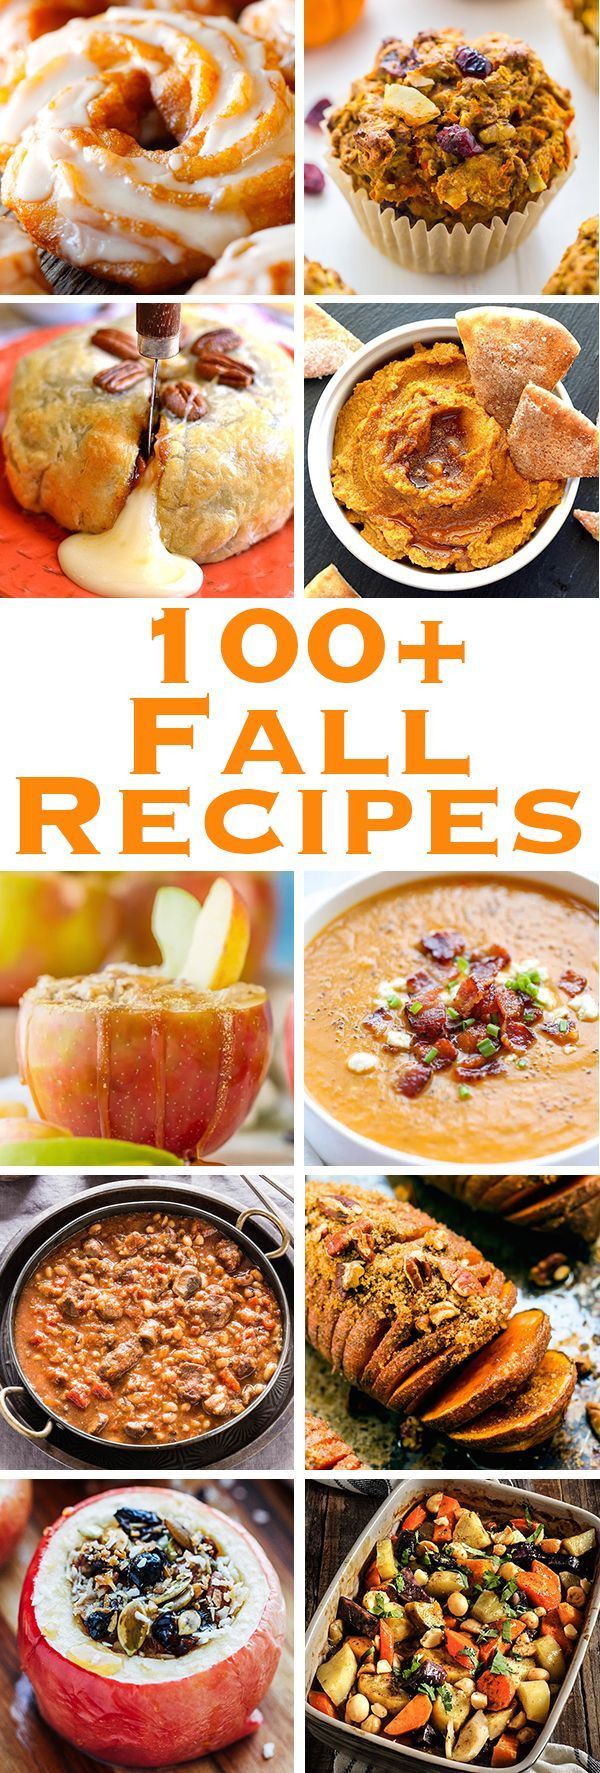 Healthy Fall Appetizers
 Best 20 Fall appetizers ideas on Pinterest